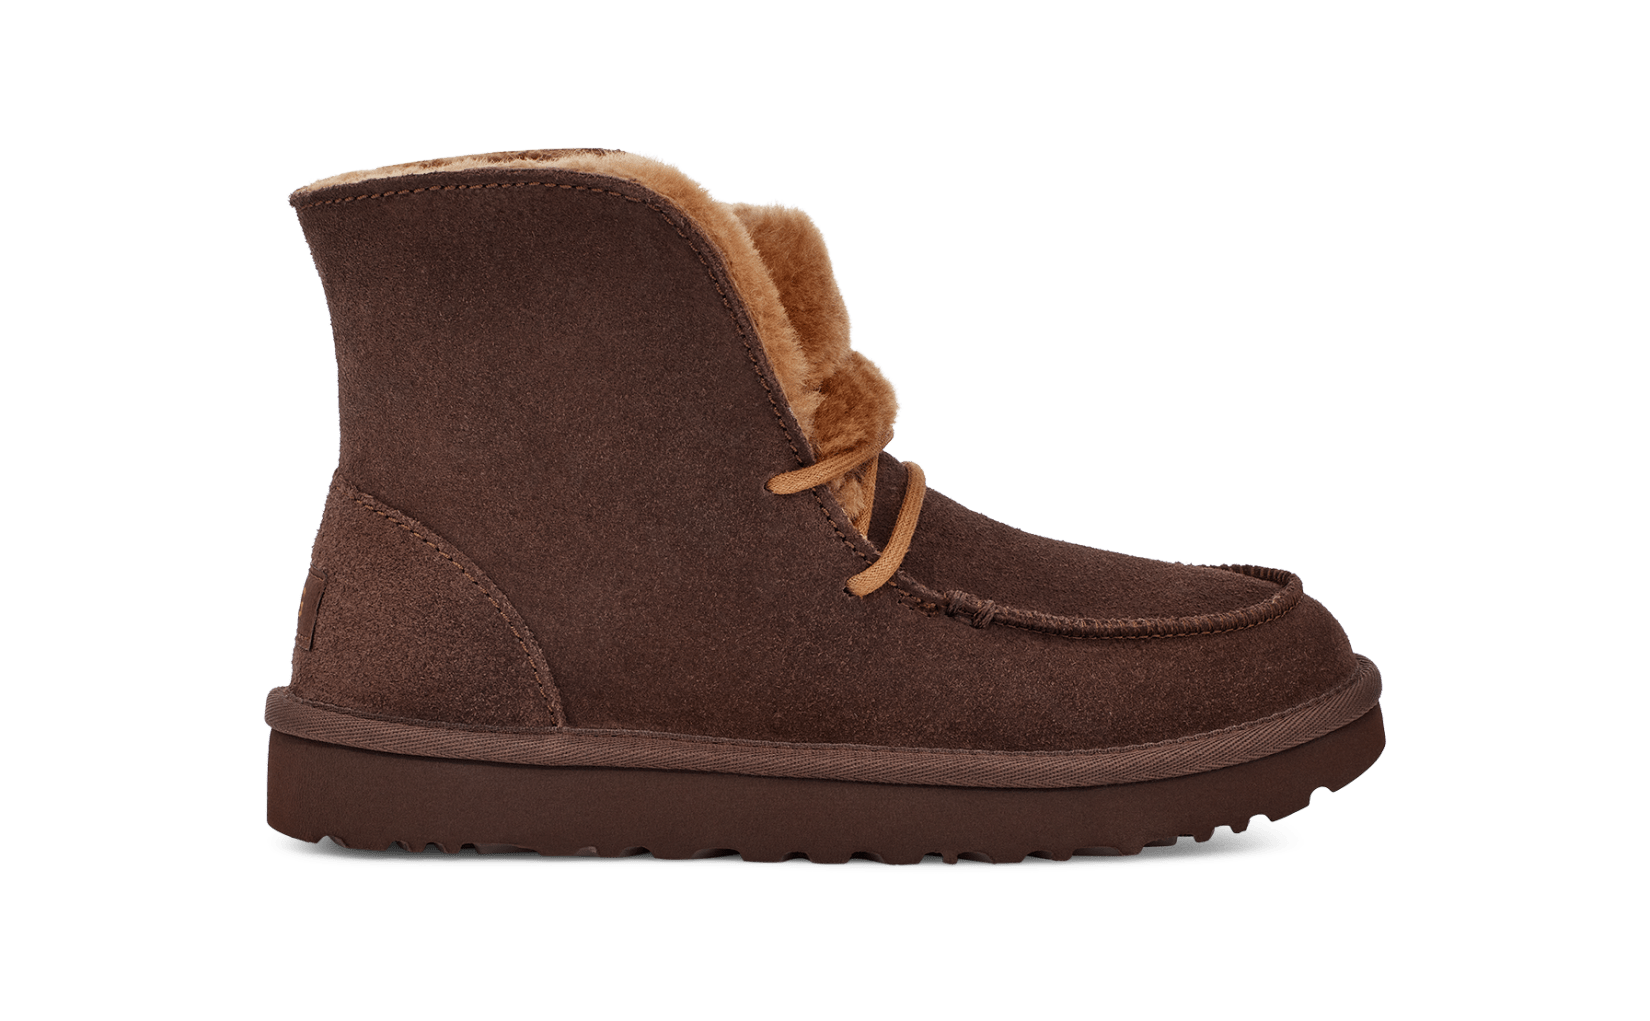 Ugg Diara Women's Boot - Chestnut Size 5